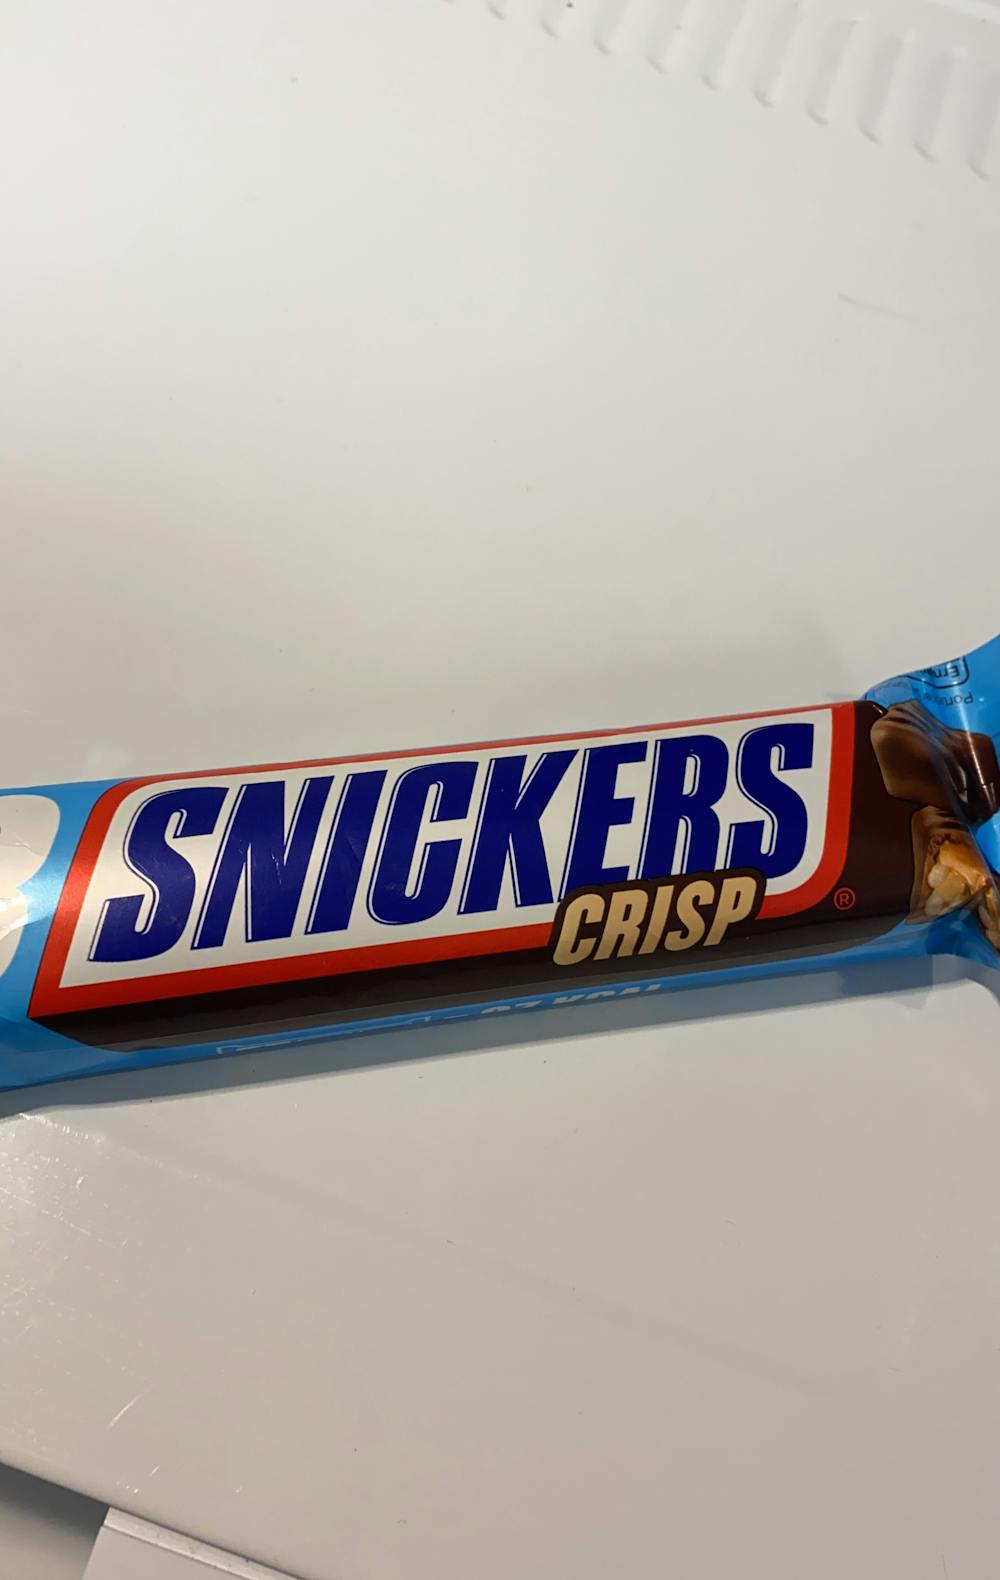 Snickers crisp, Snickers